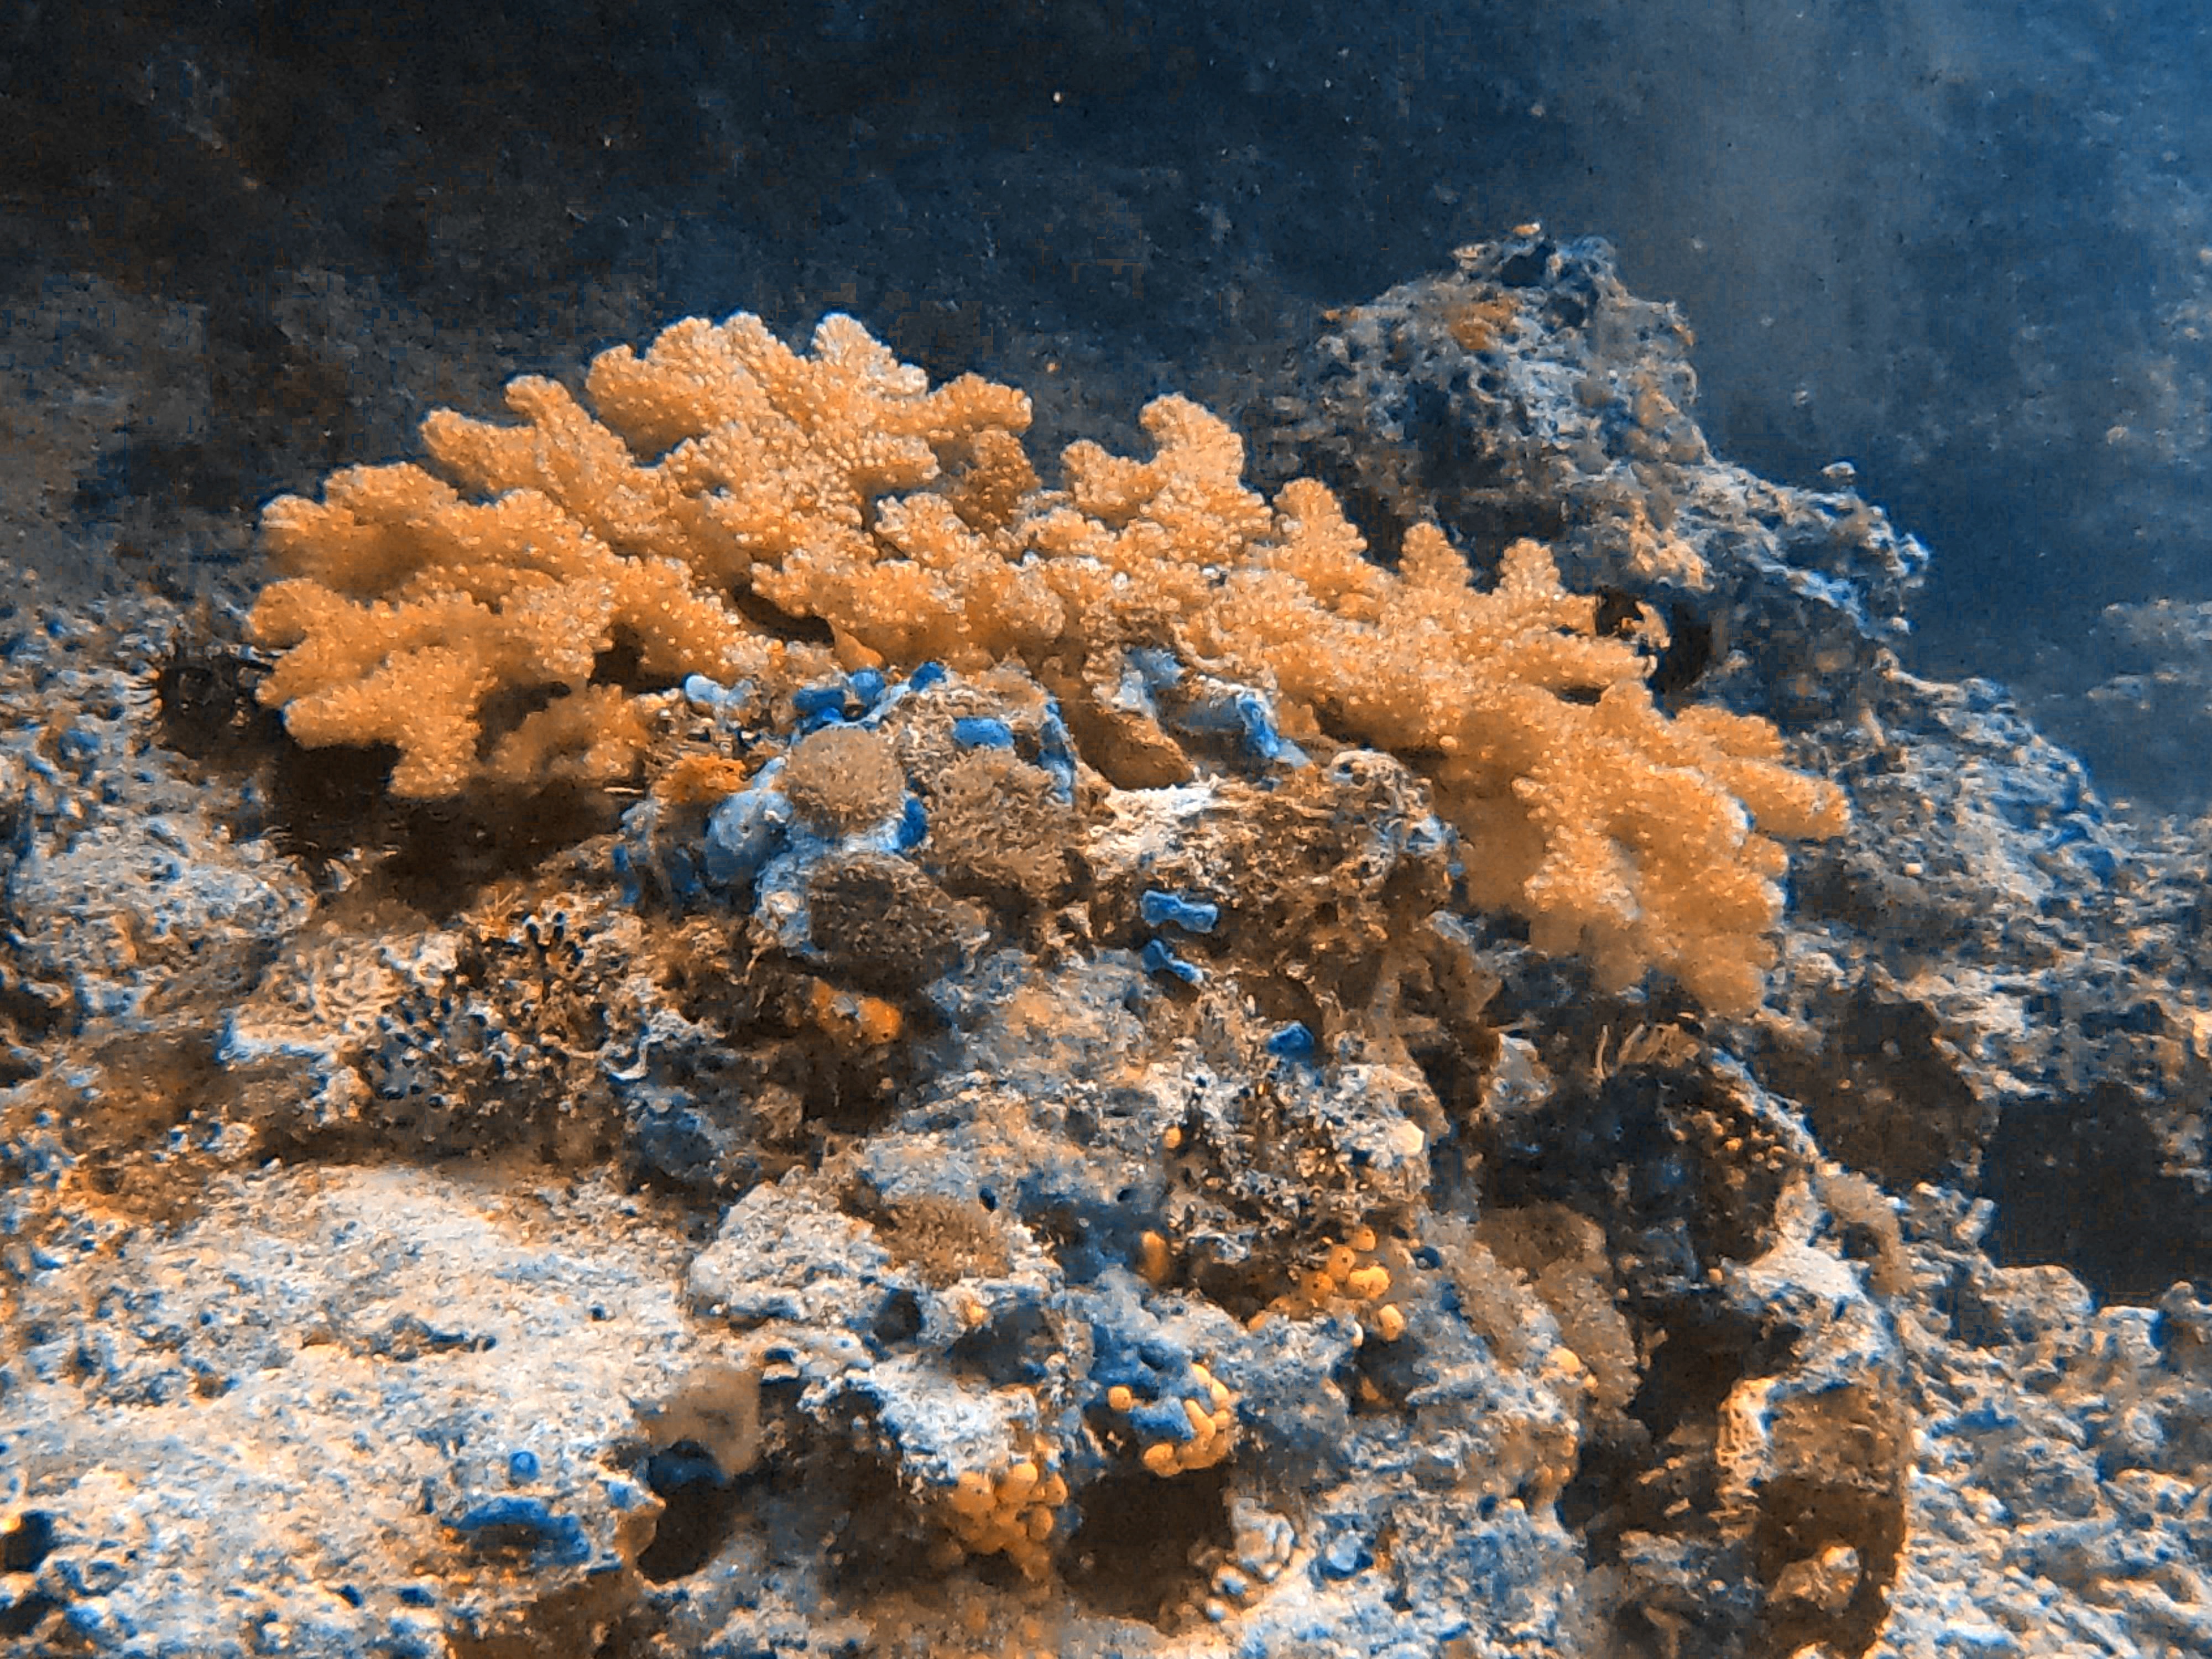 corals